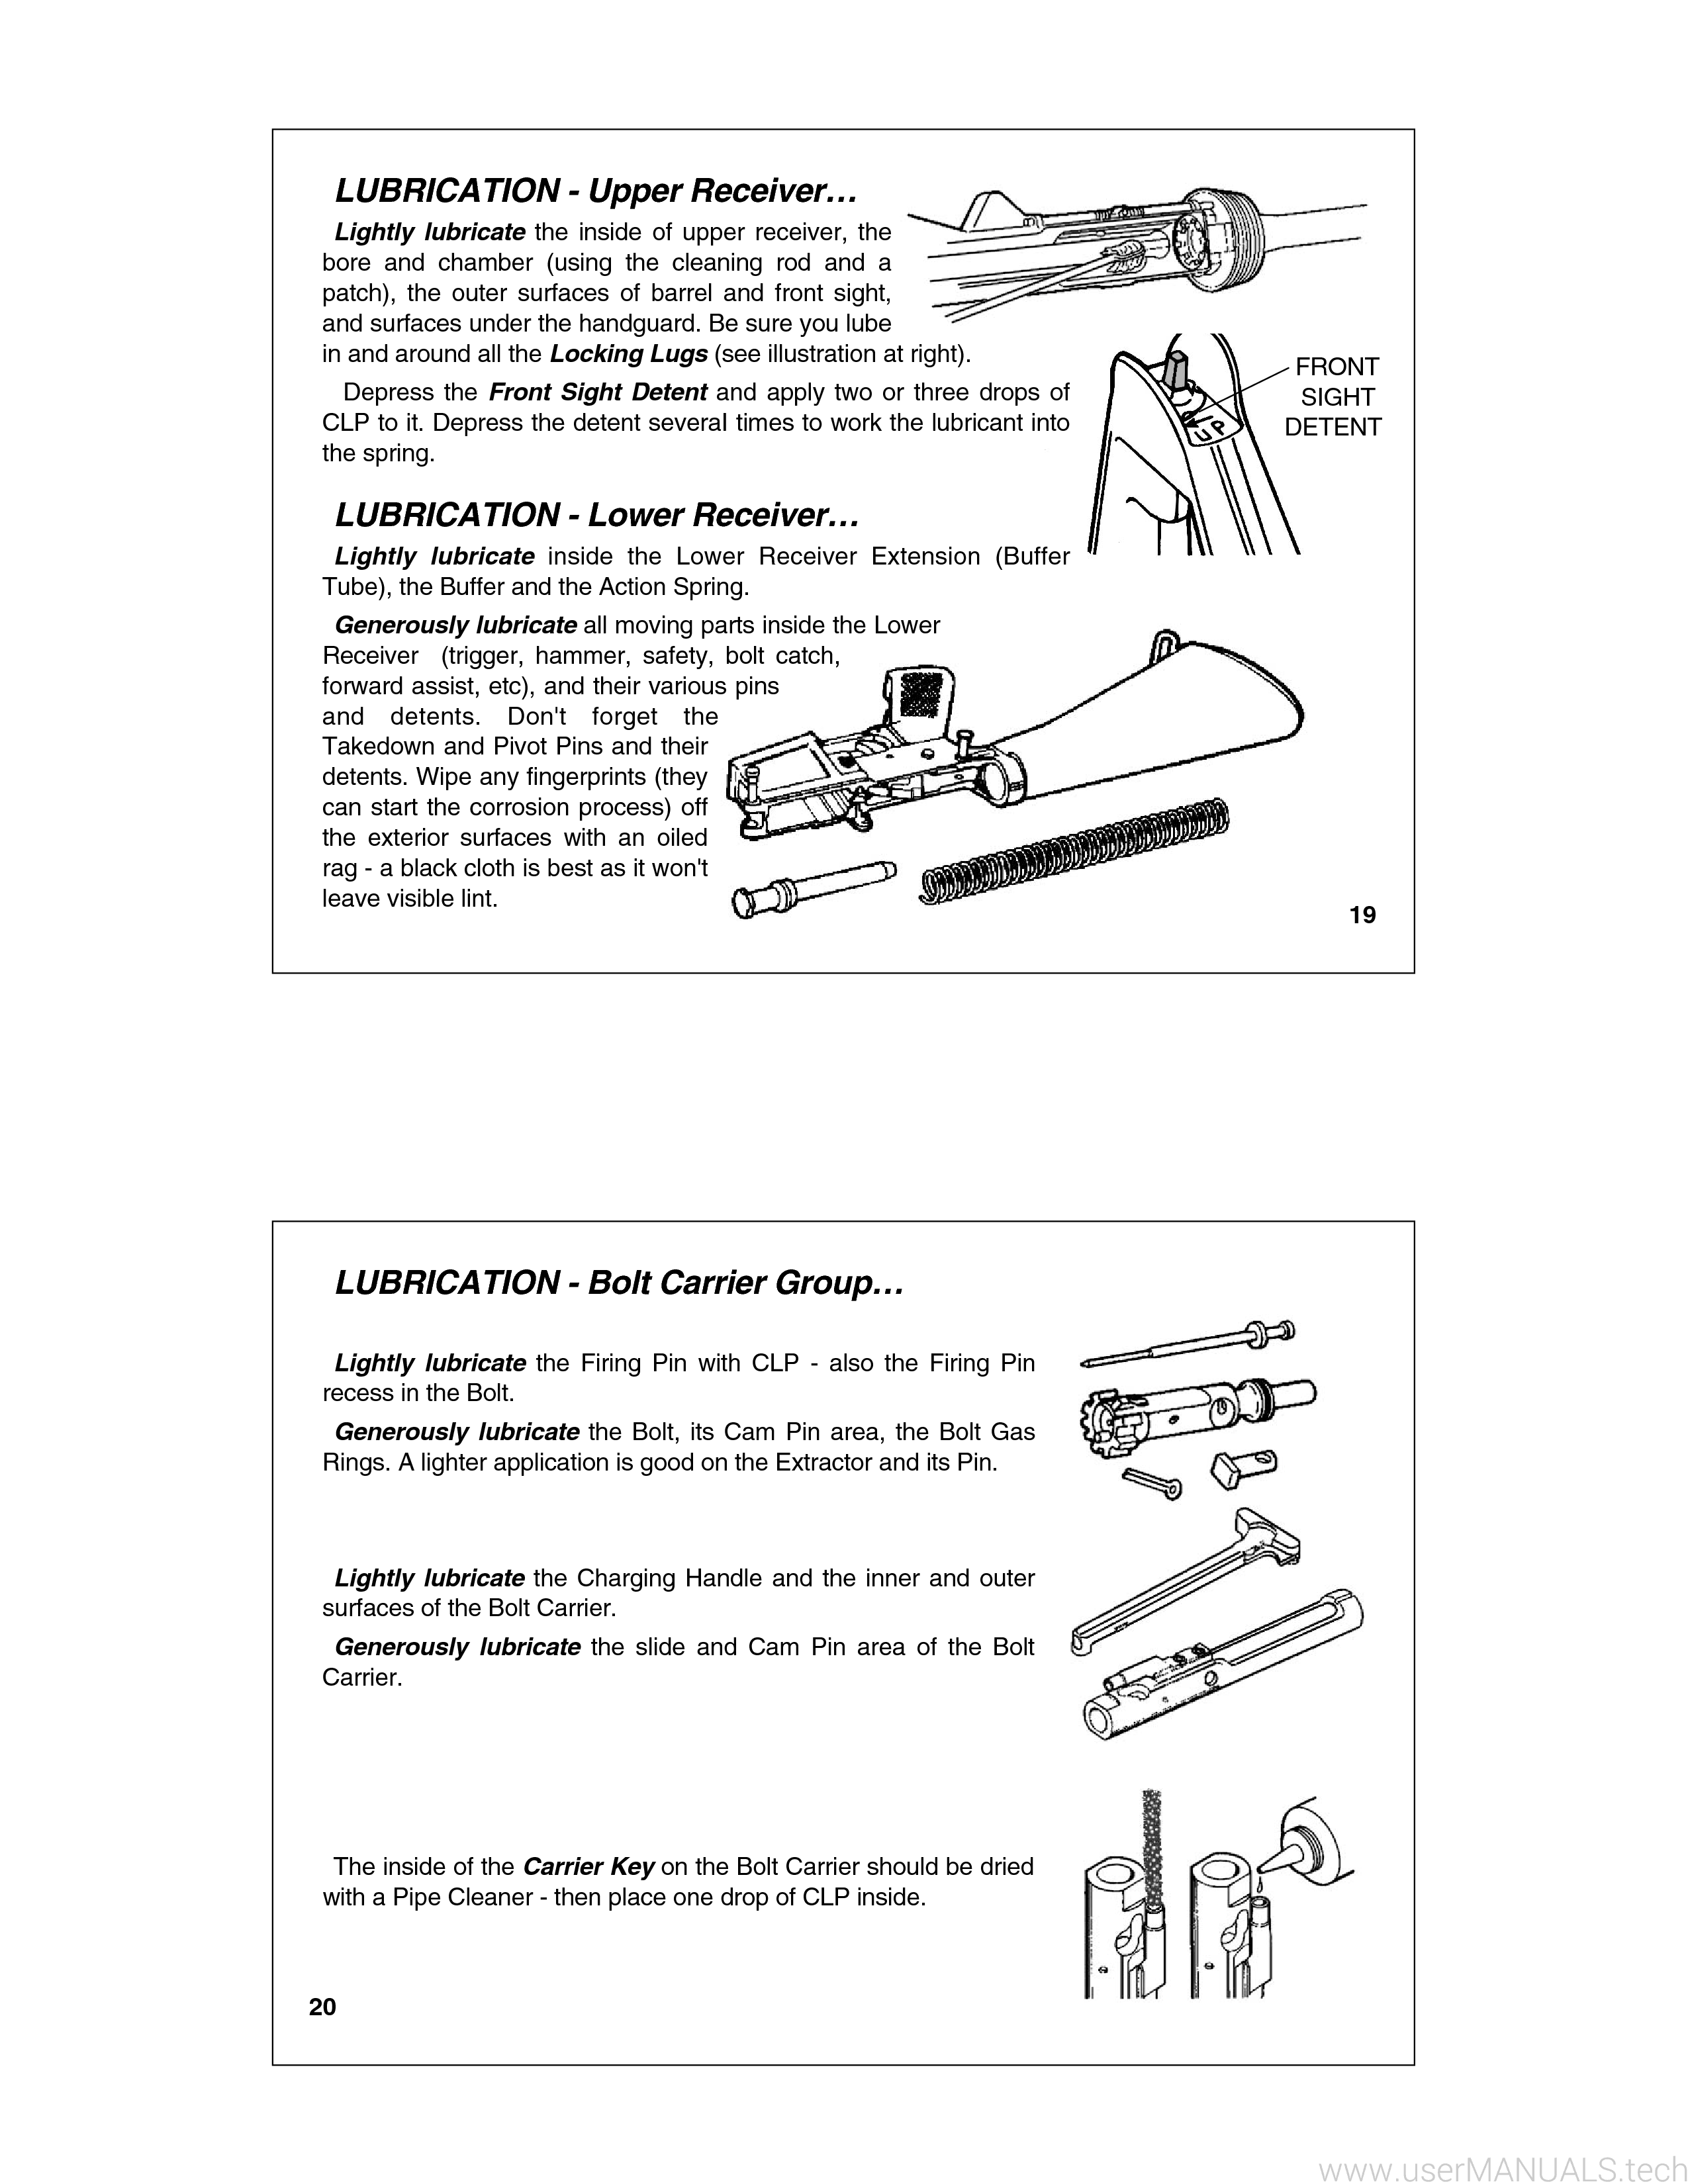 bushmaster jupiter f700 telescope manual pdf